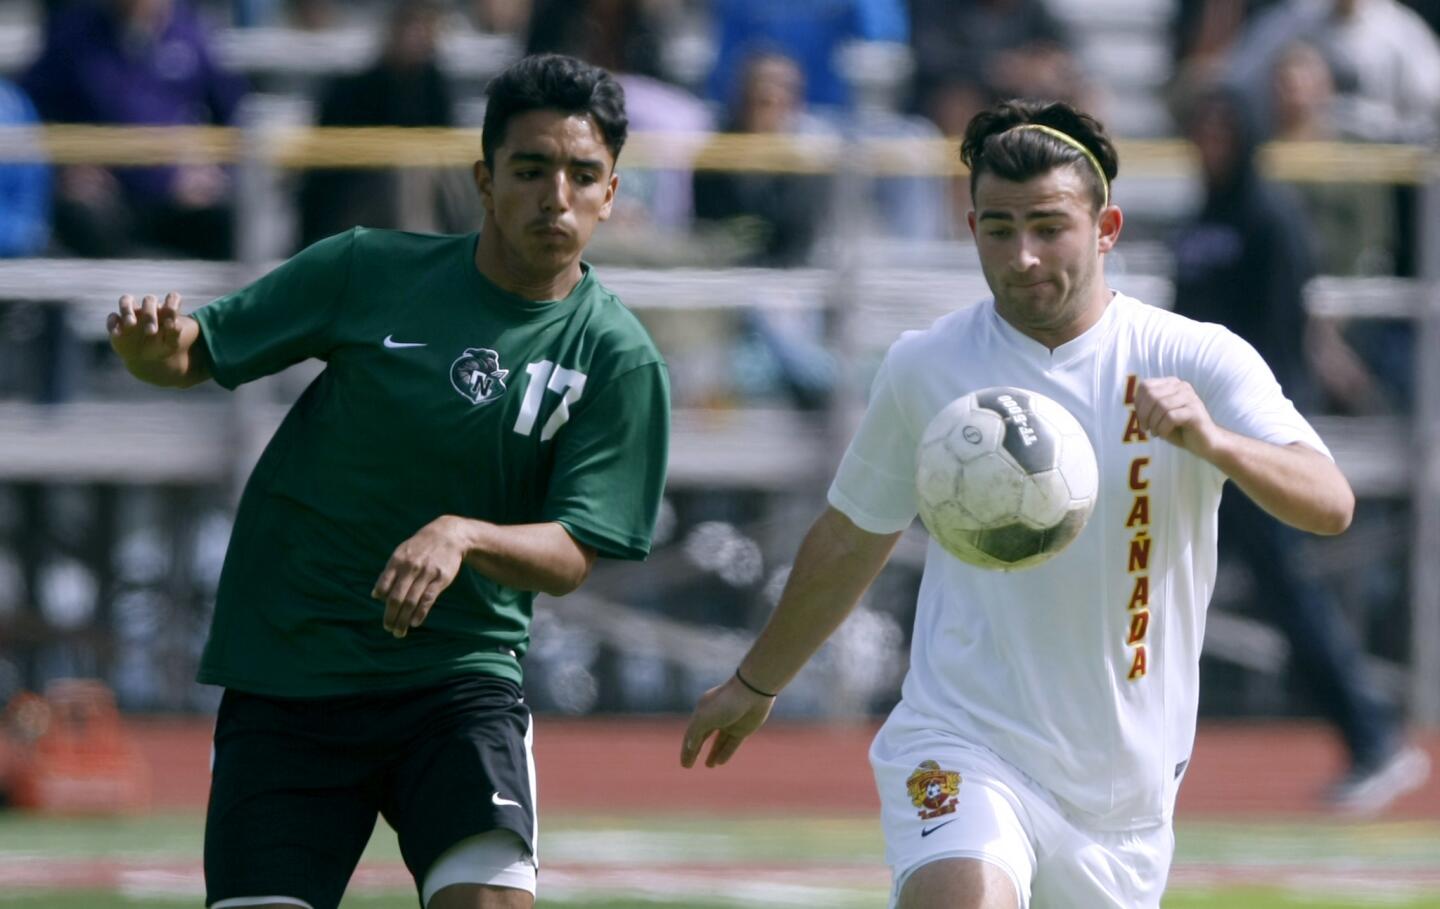 Photo Gallery: La Cañada High School boys soccer advances in CIF playoffs in thriller match vs. Nogales High School